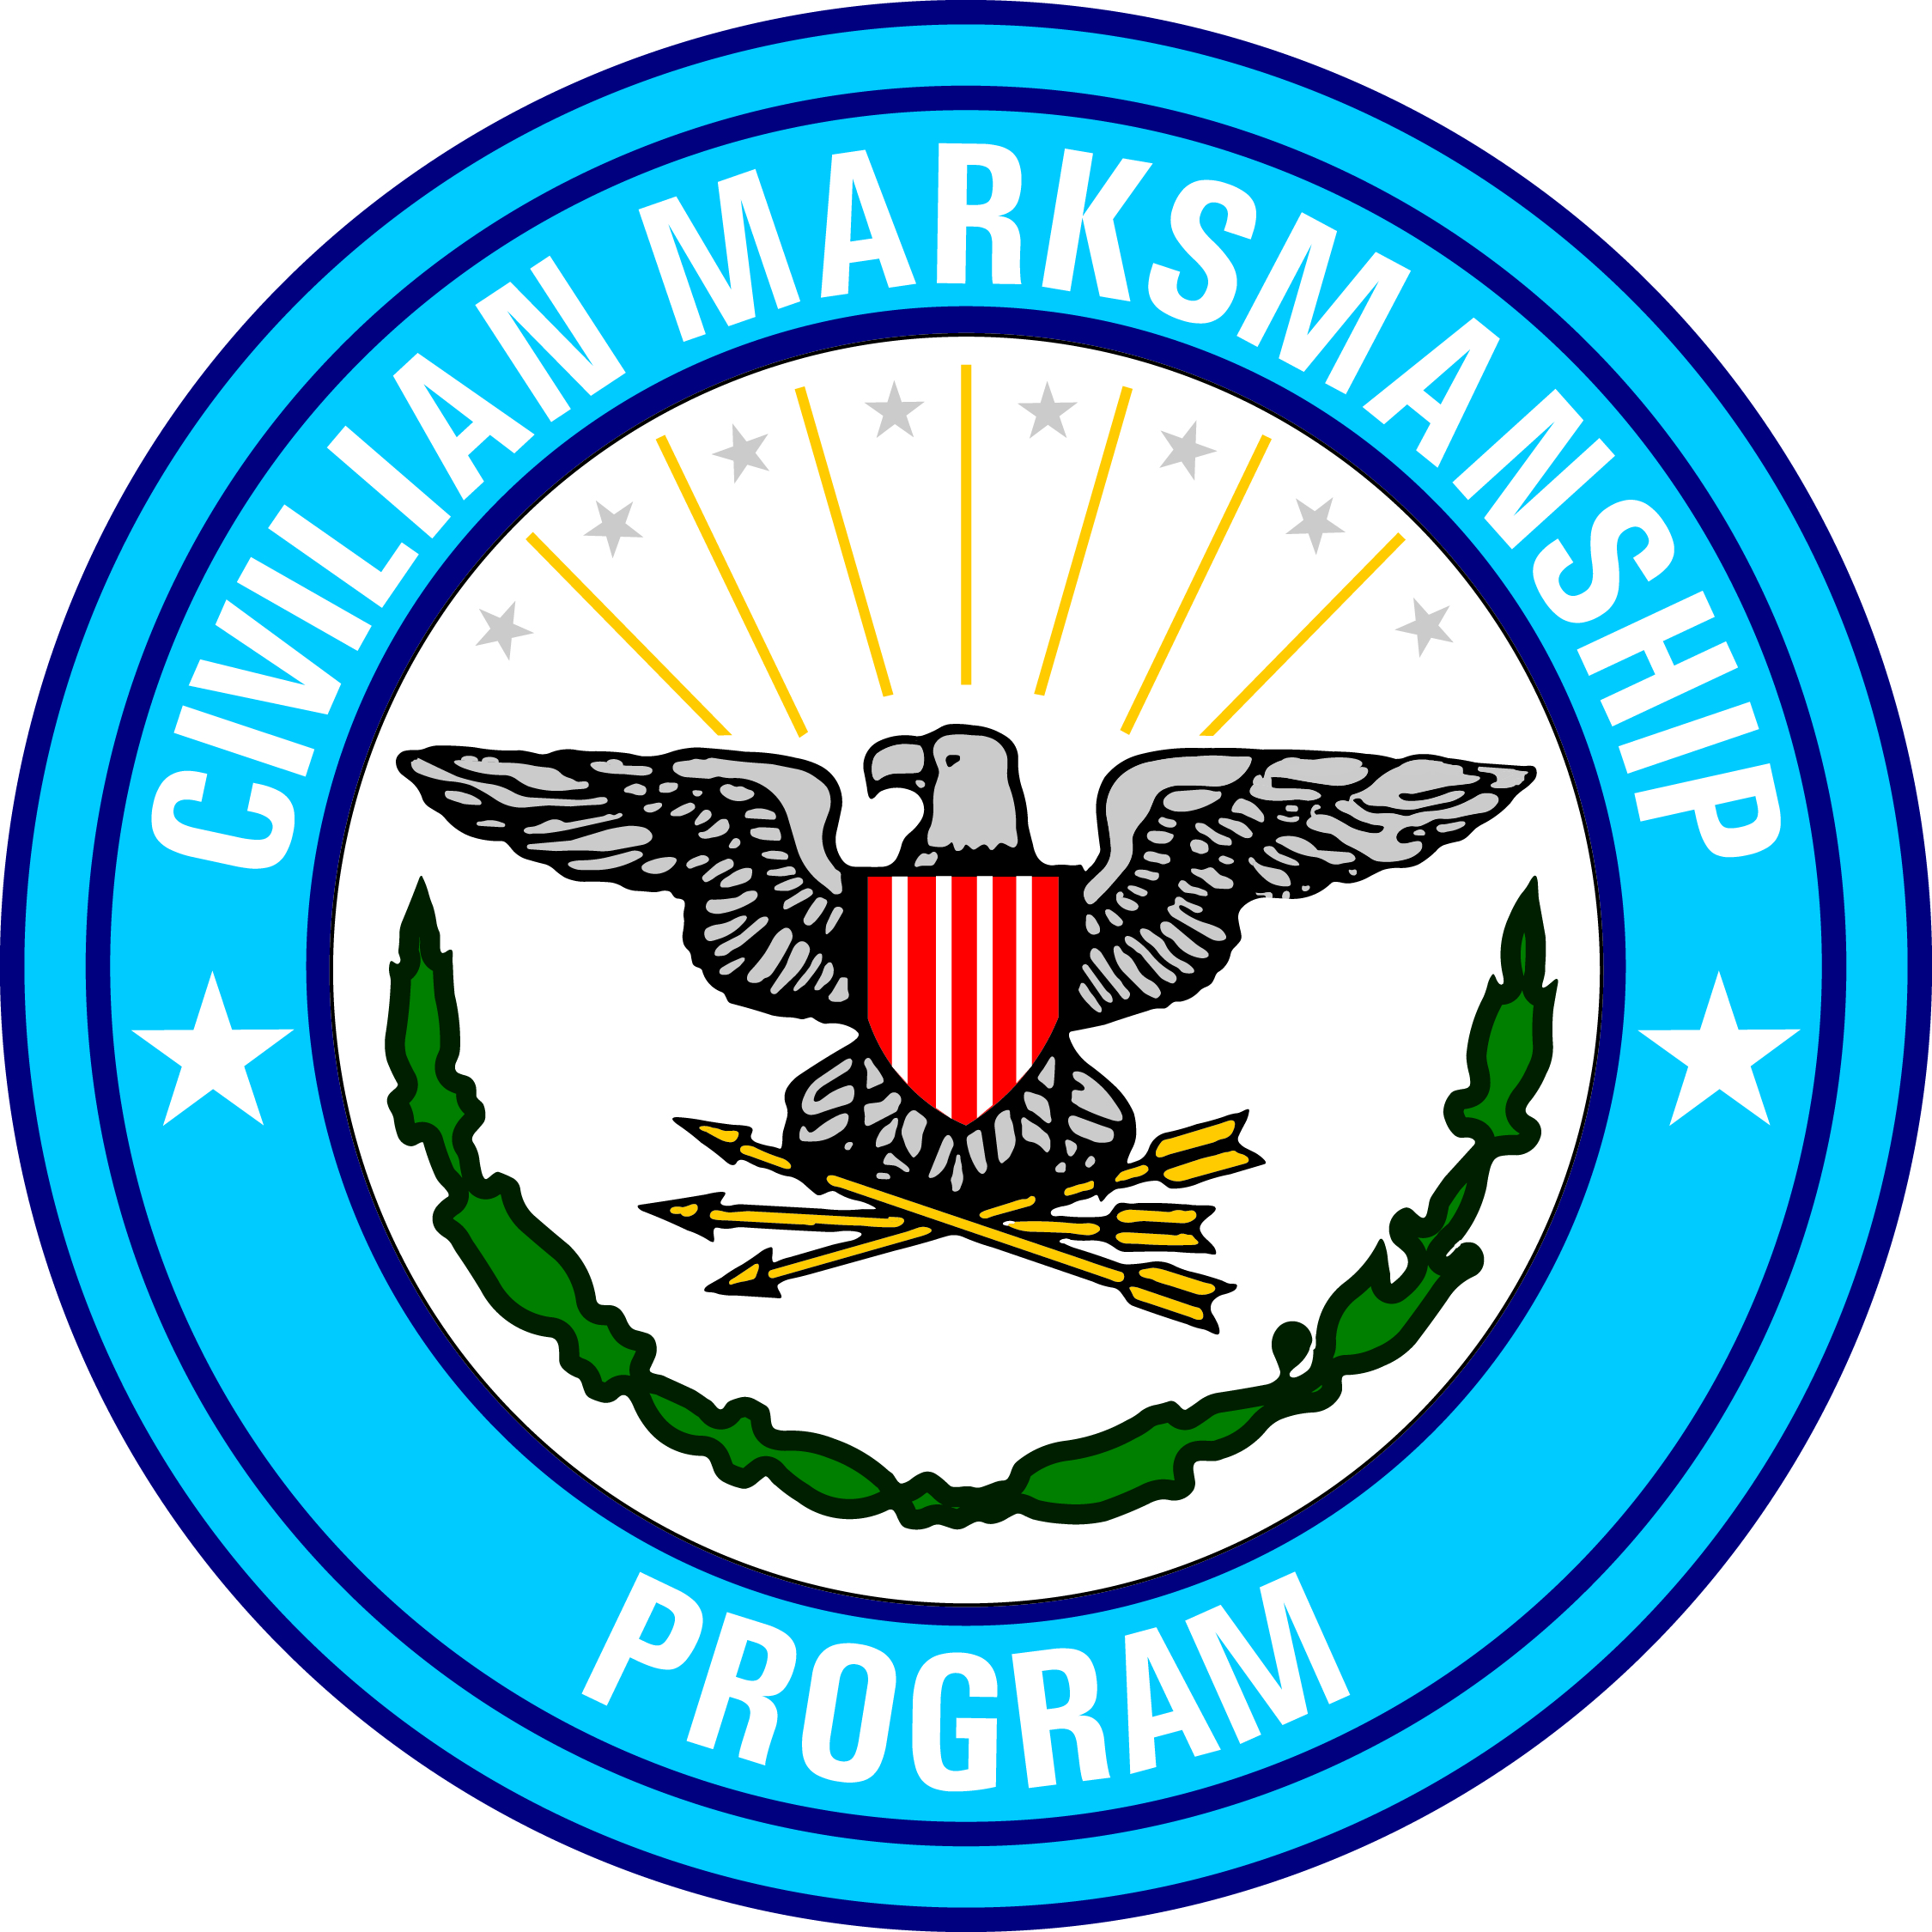 civilian marksmanship program store